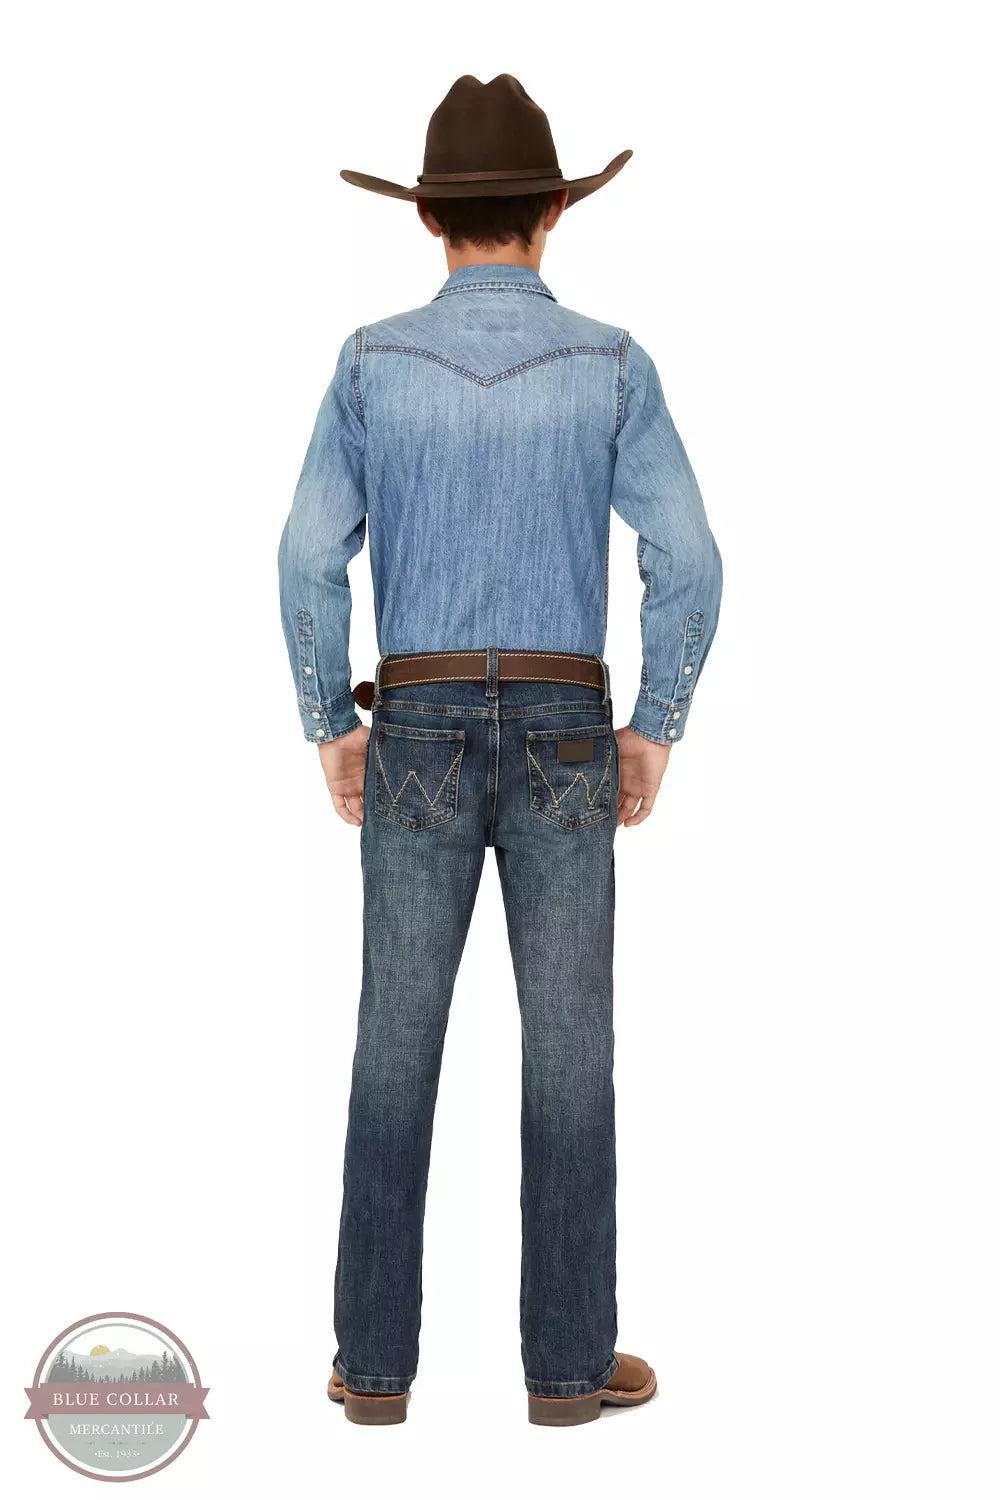 Wrangler 112336145 Retro Slim Bootcut Jeans in Layton Full Back View